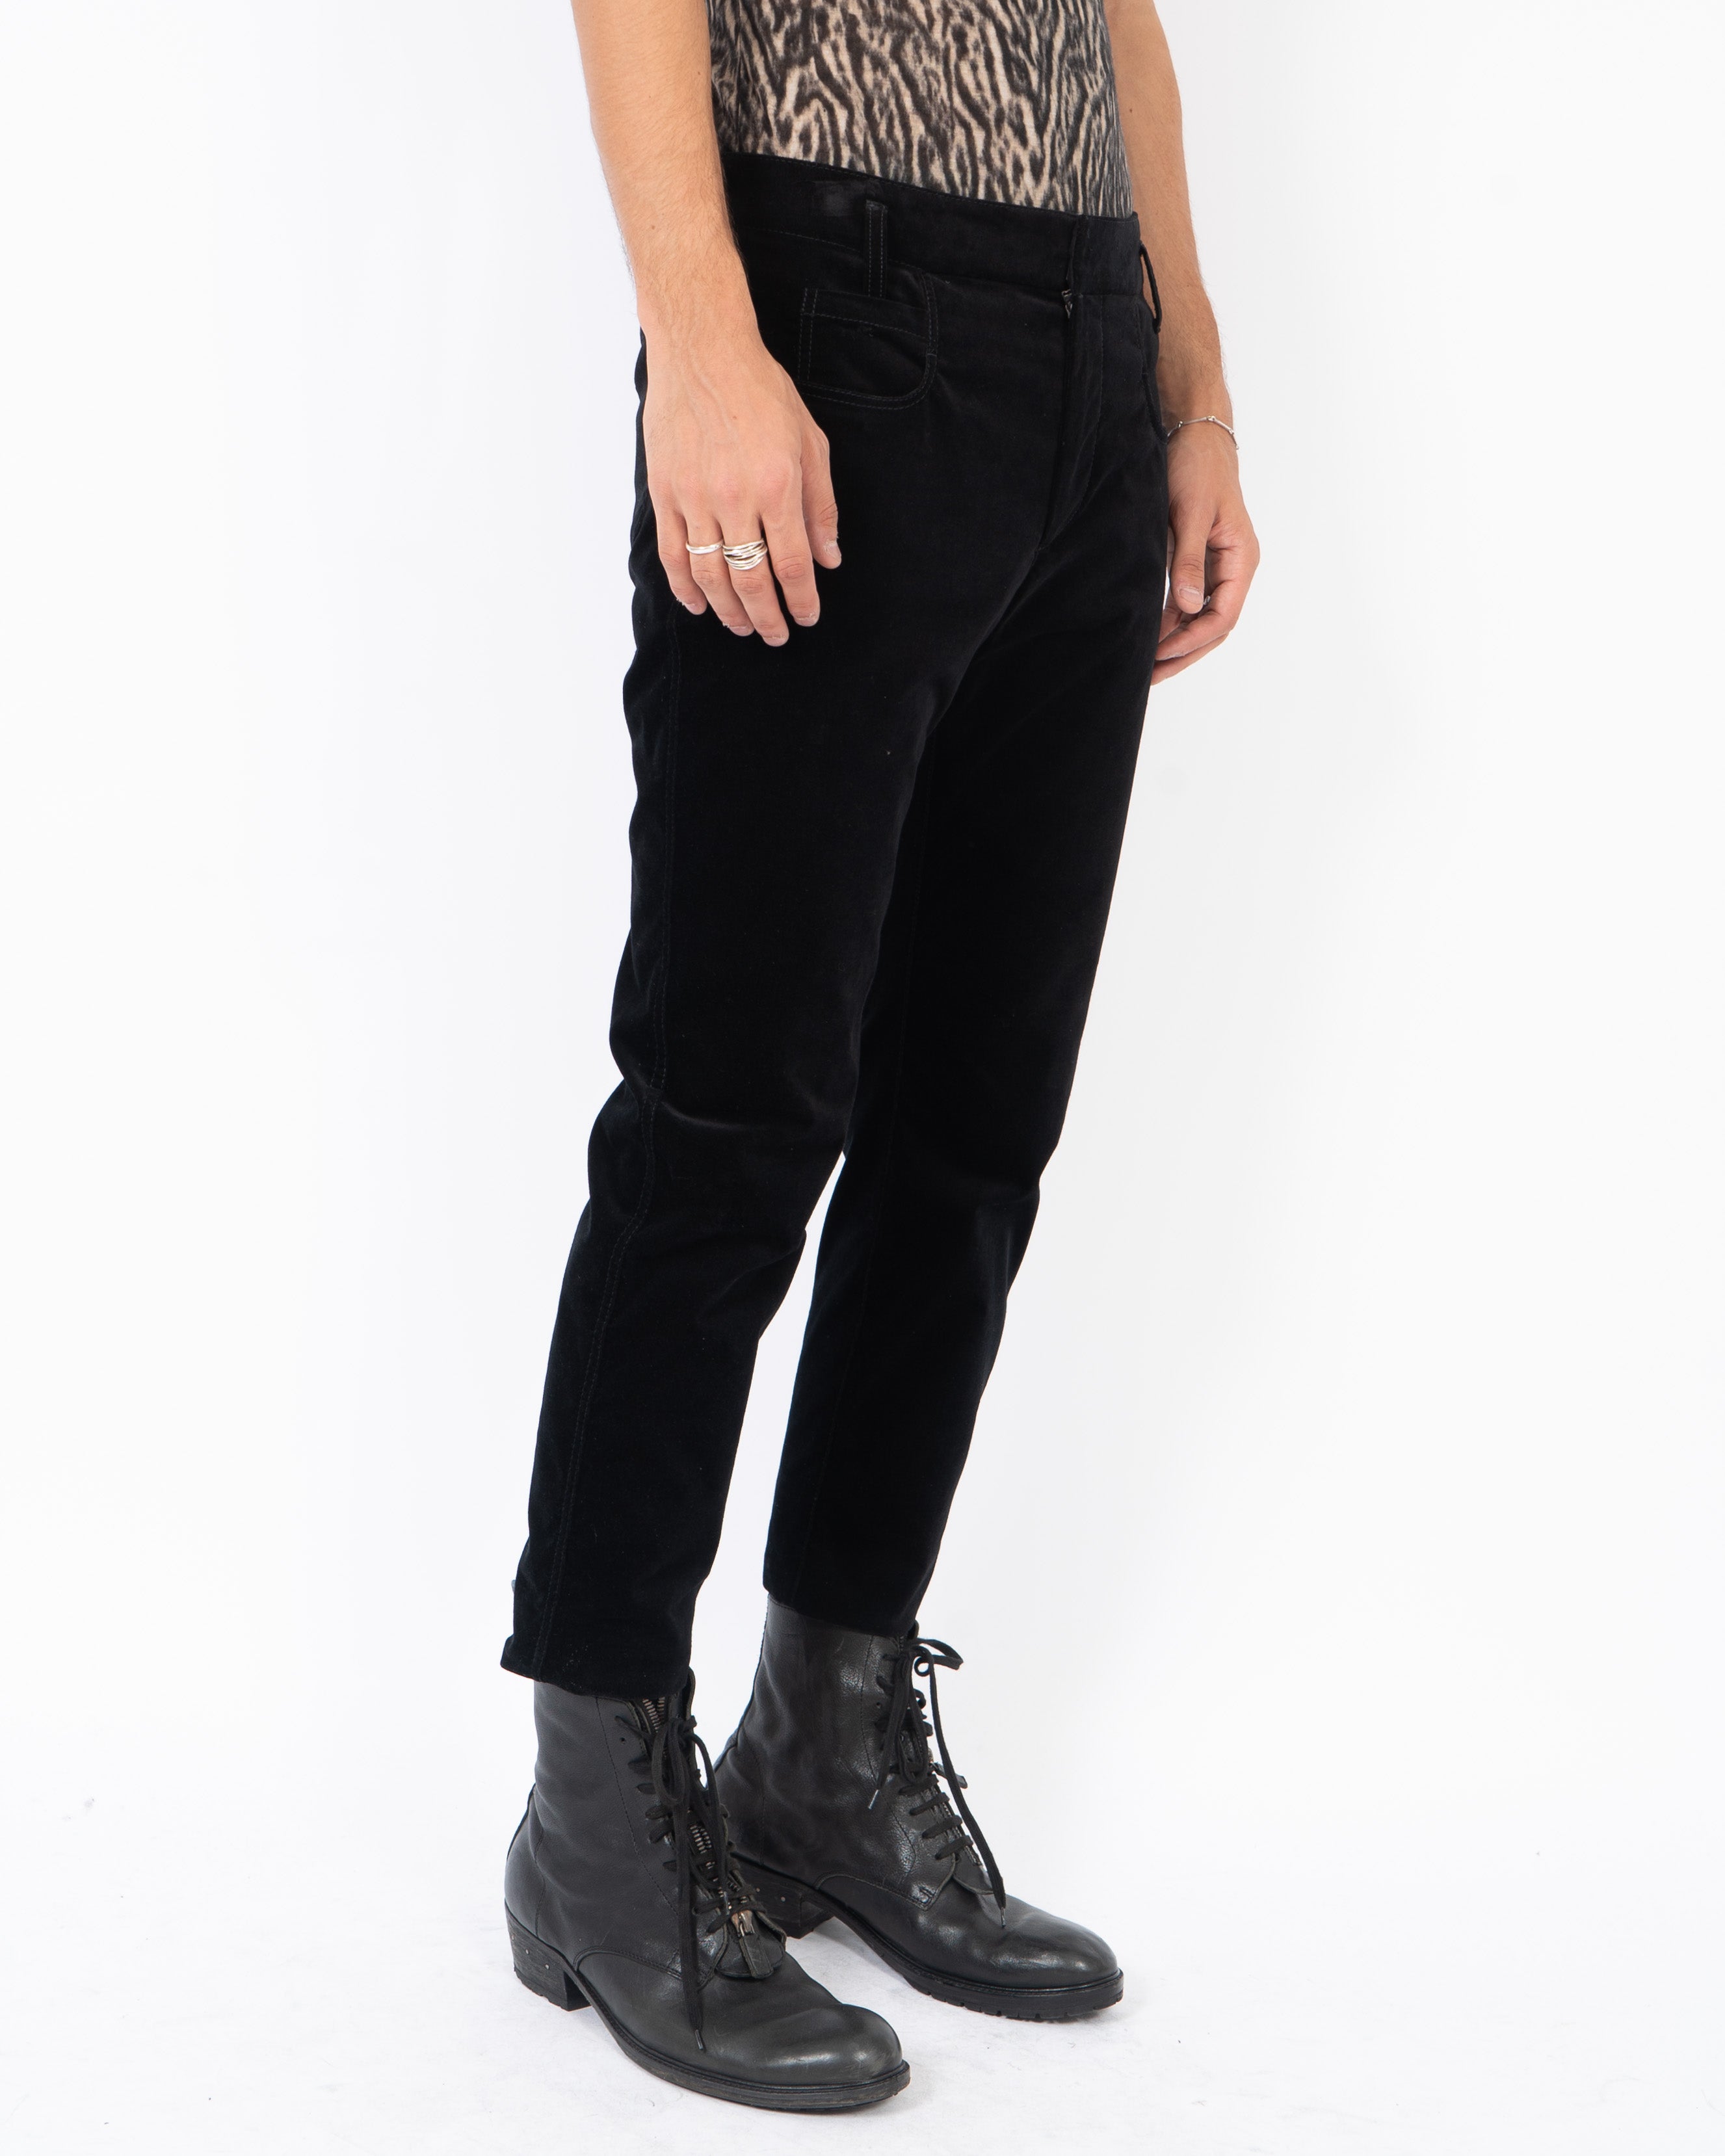 FW17 Skinny Trousers Goya Black Sample